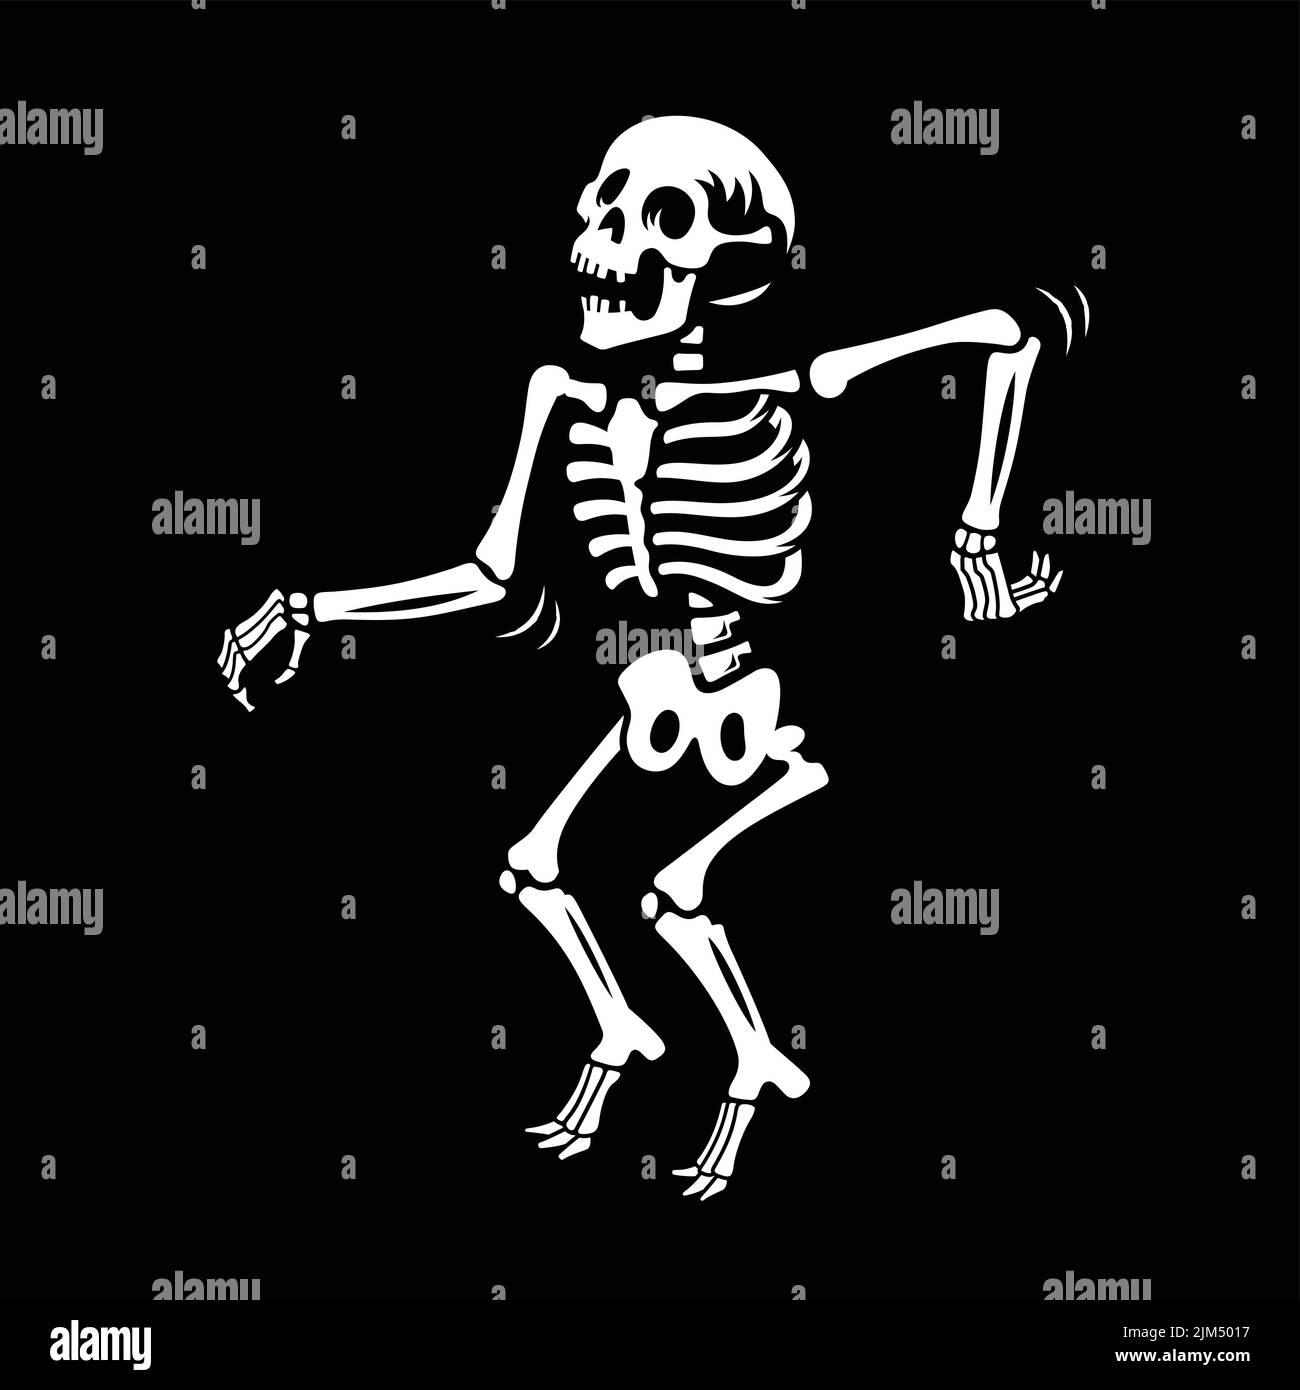 Dancing skeleton vector illustration on black background Stock Vector